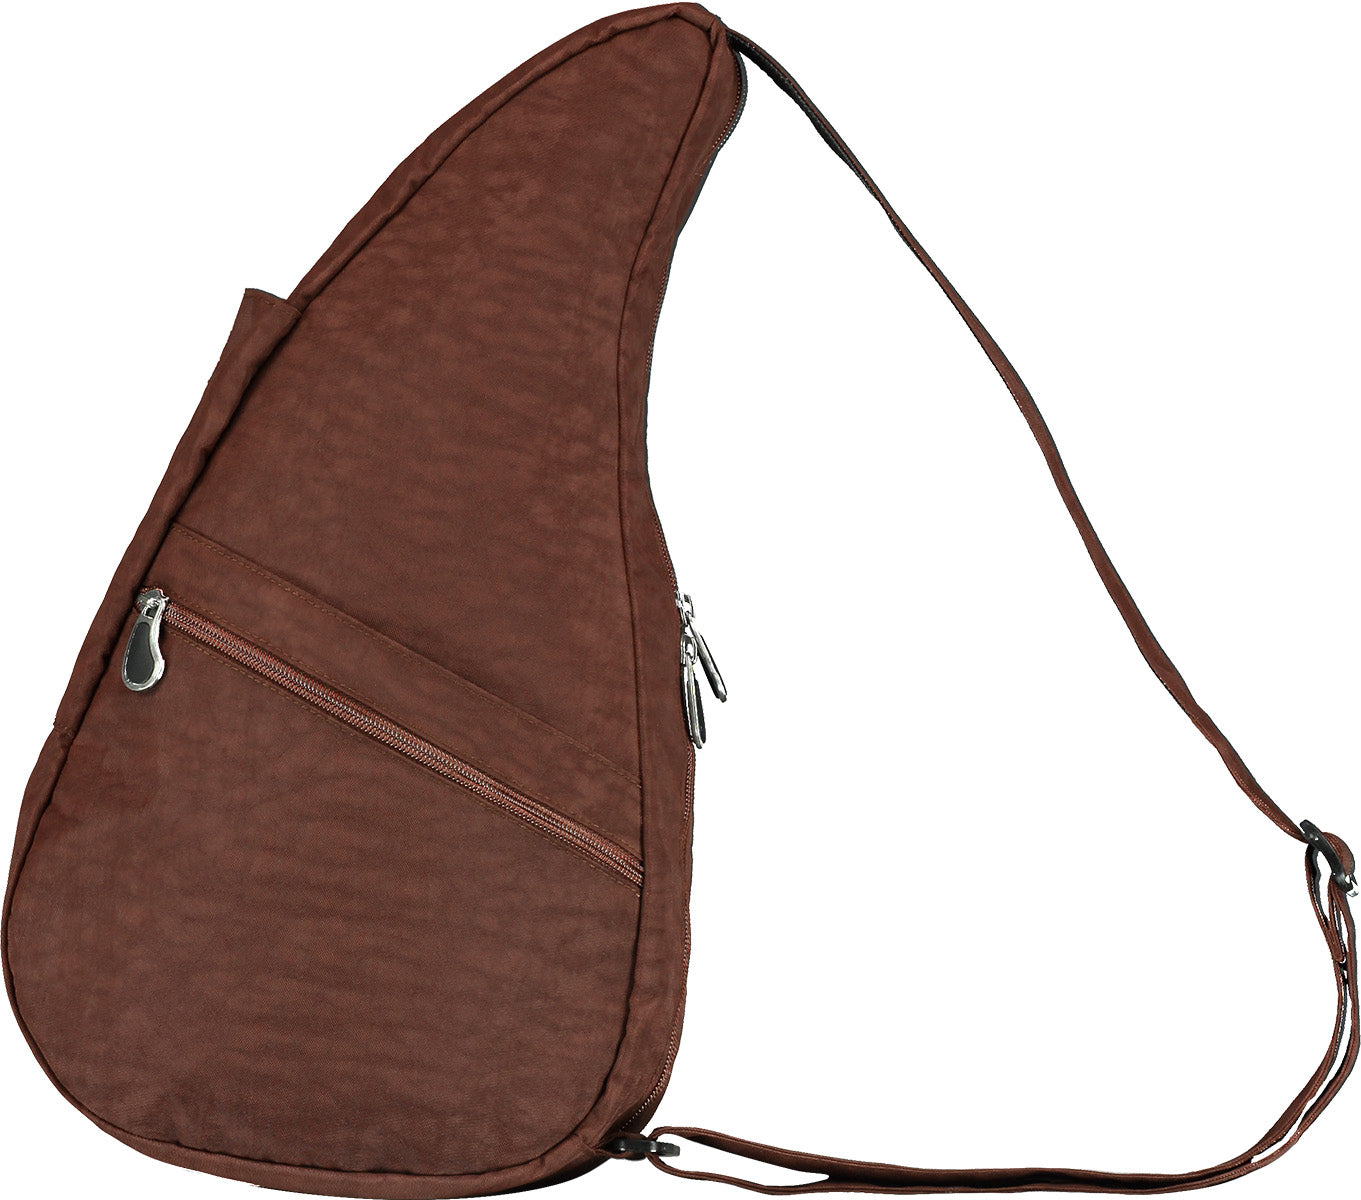 AmeriBag Healthy Back Bag tote Distressed Nylon Extra Small (Brown)